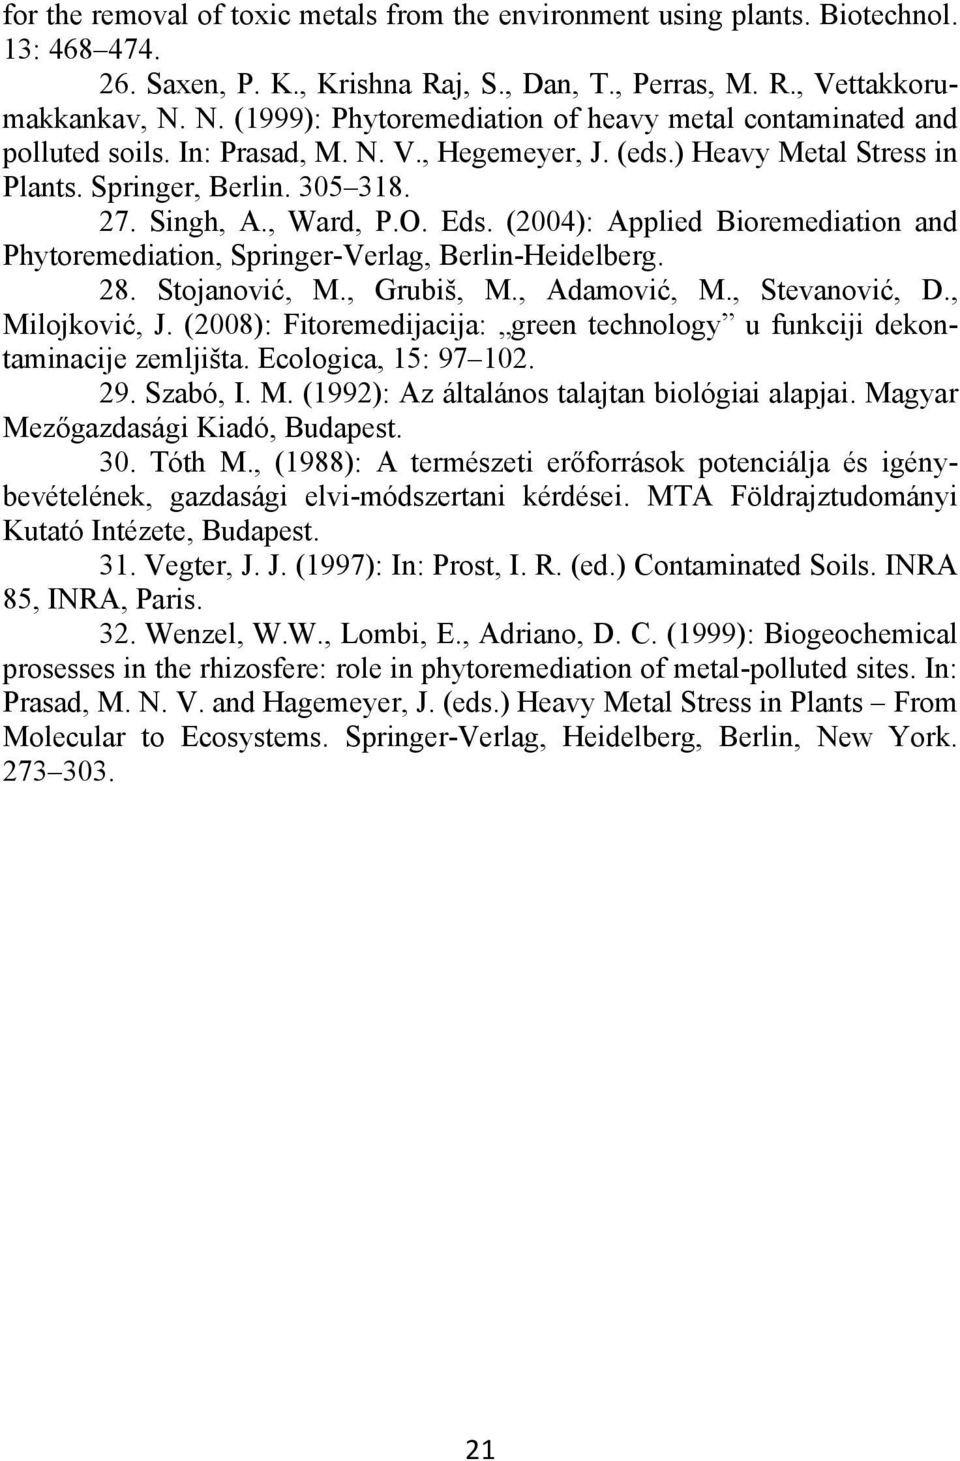 O. Eds. (2004): Applied Bioremediation and Phytoremediation, Springer-Verlag, Berlin-Heidelberg. 28. Stojanović, M., Grubiš, M., Adamović, M., Stevanović, D., Milojković, J.